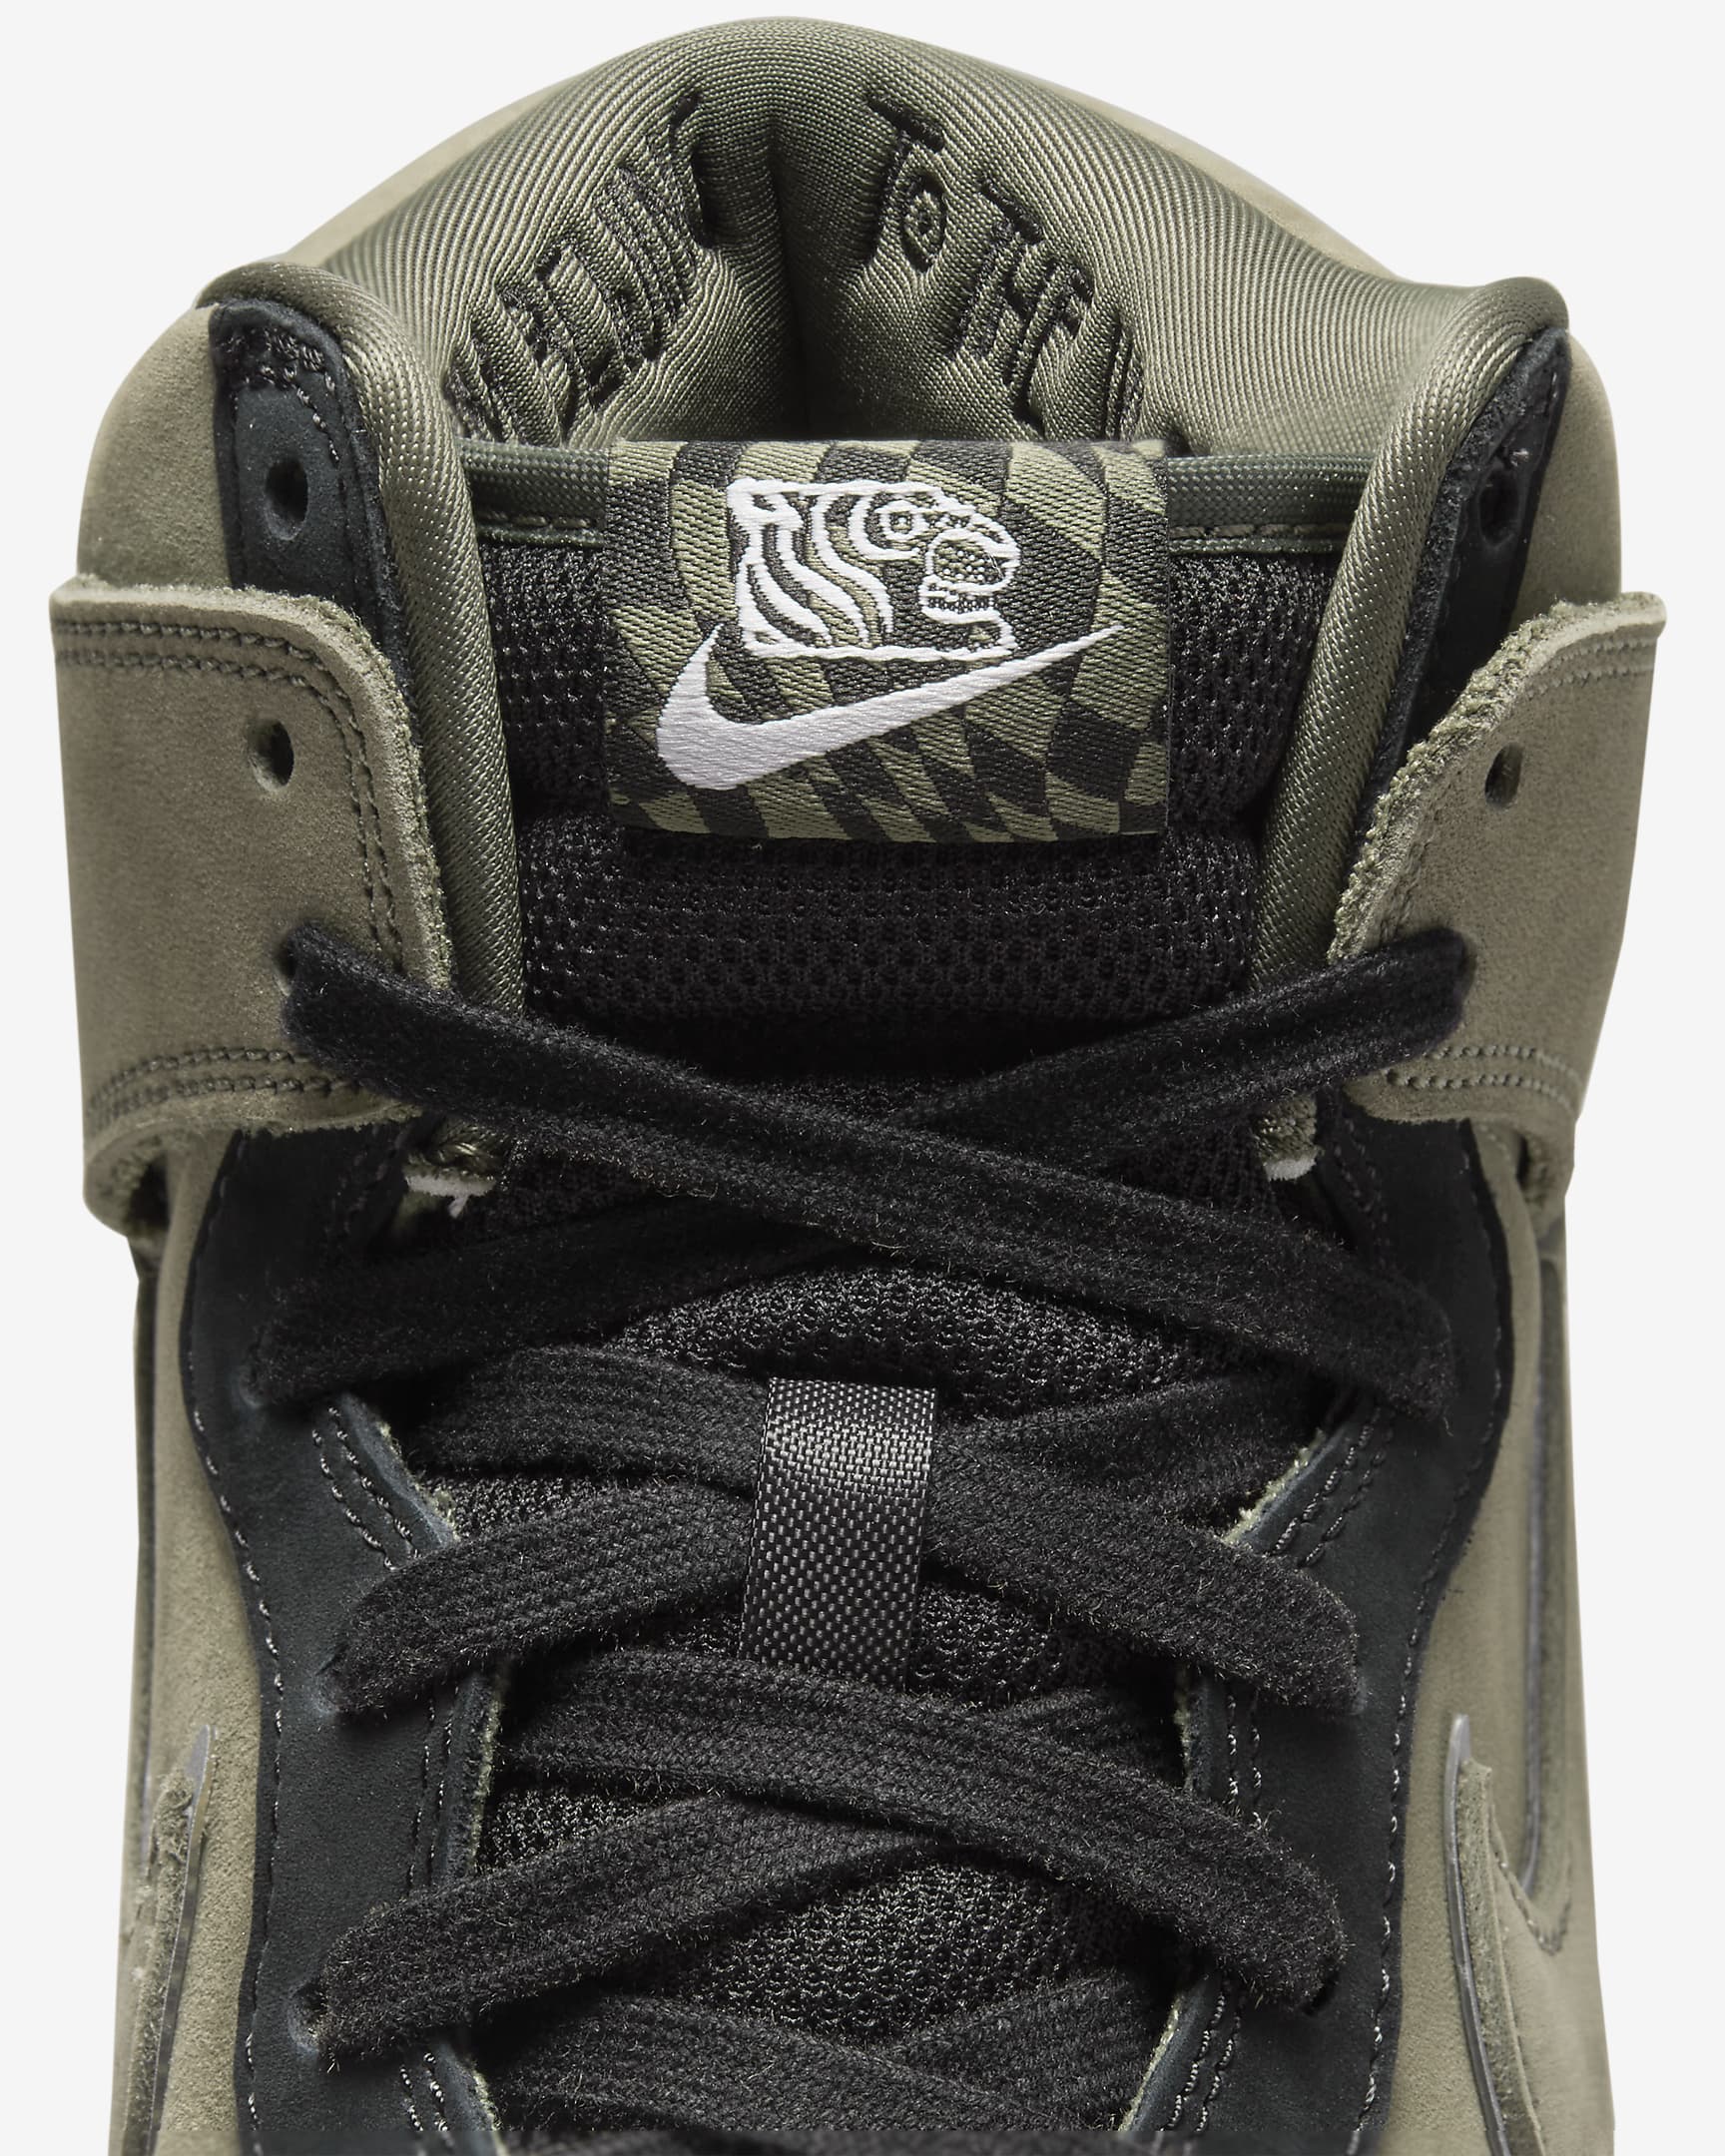 Nike Dunk High x SOULGOODS Men's Shoes - Medium Olive/Black/Multi-Colour